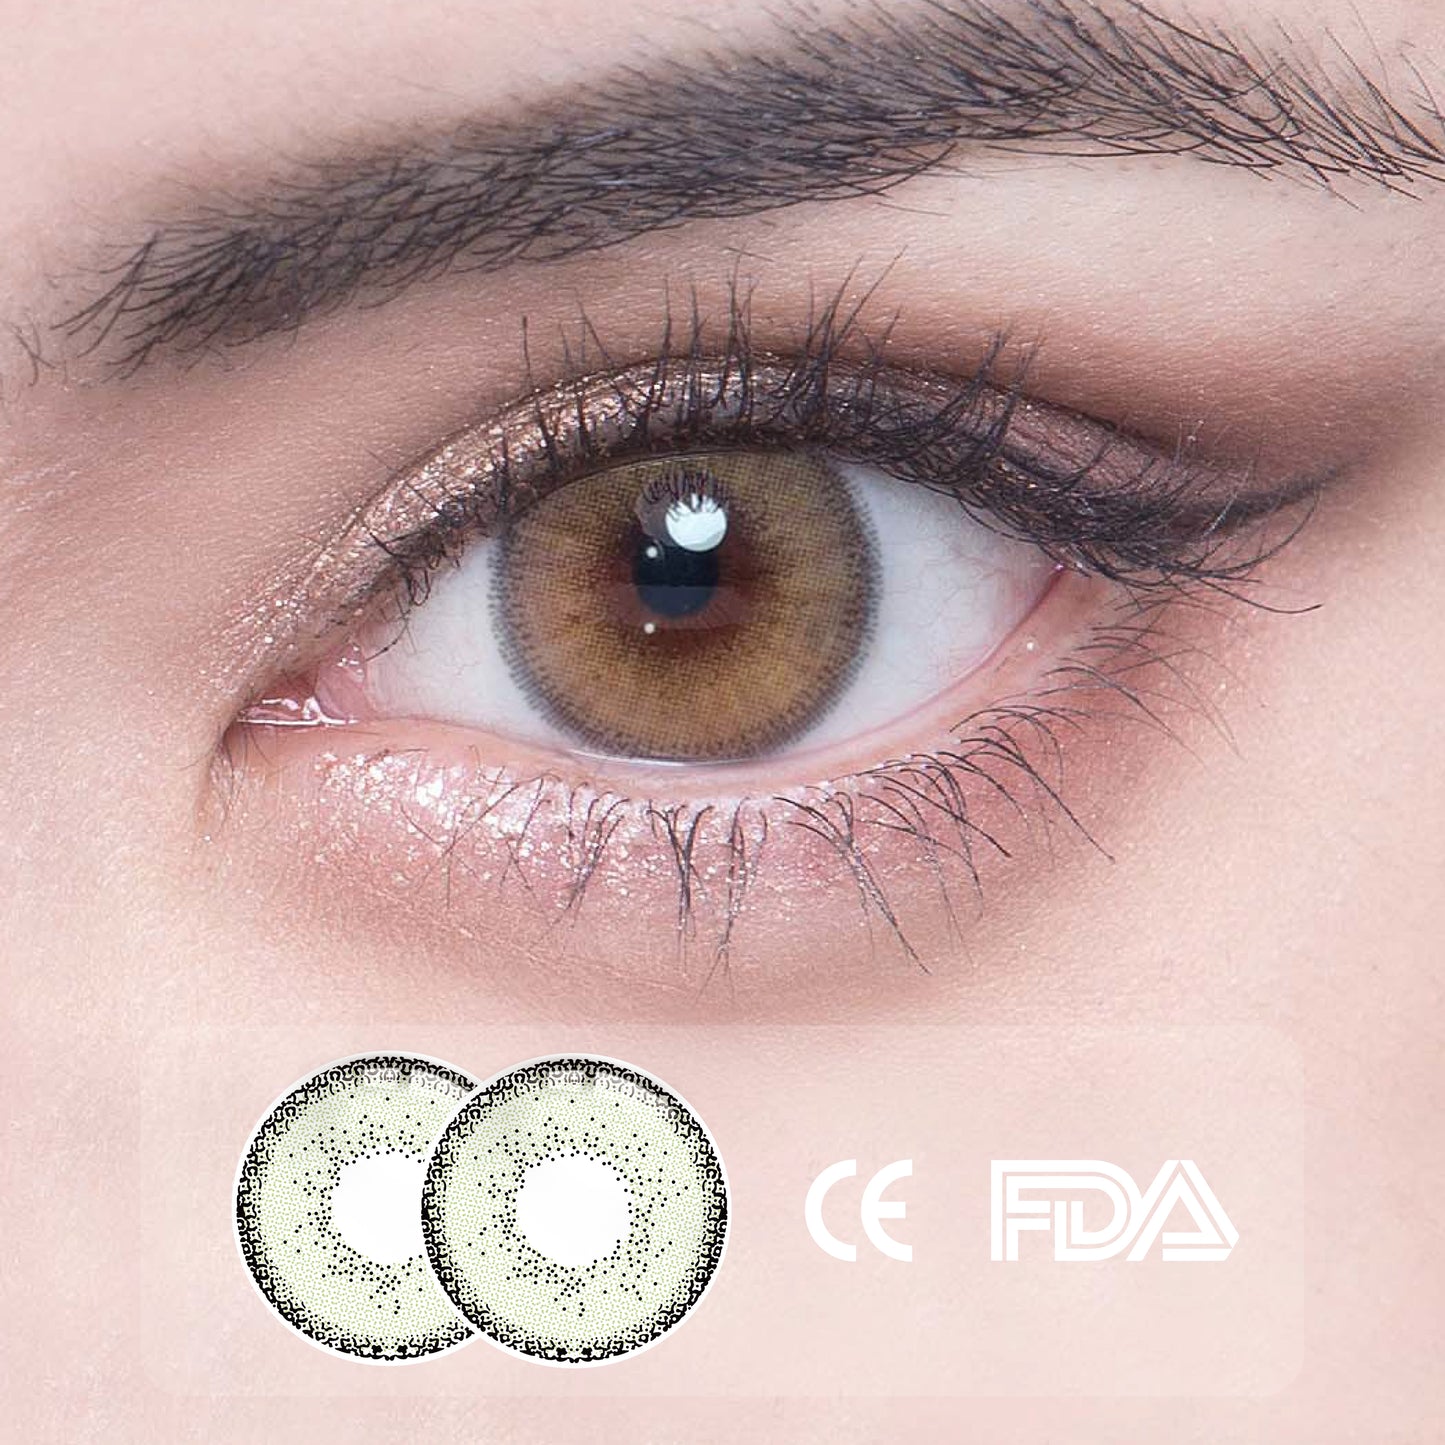 1Pcs  FDA Certificate Eyes Colorful Contact Lenses - Vibrancy green